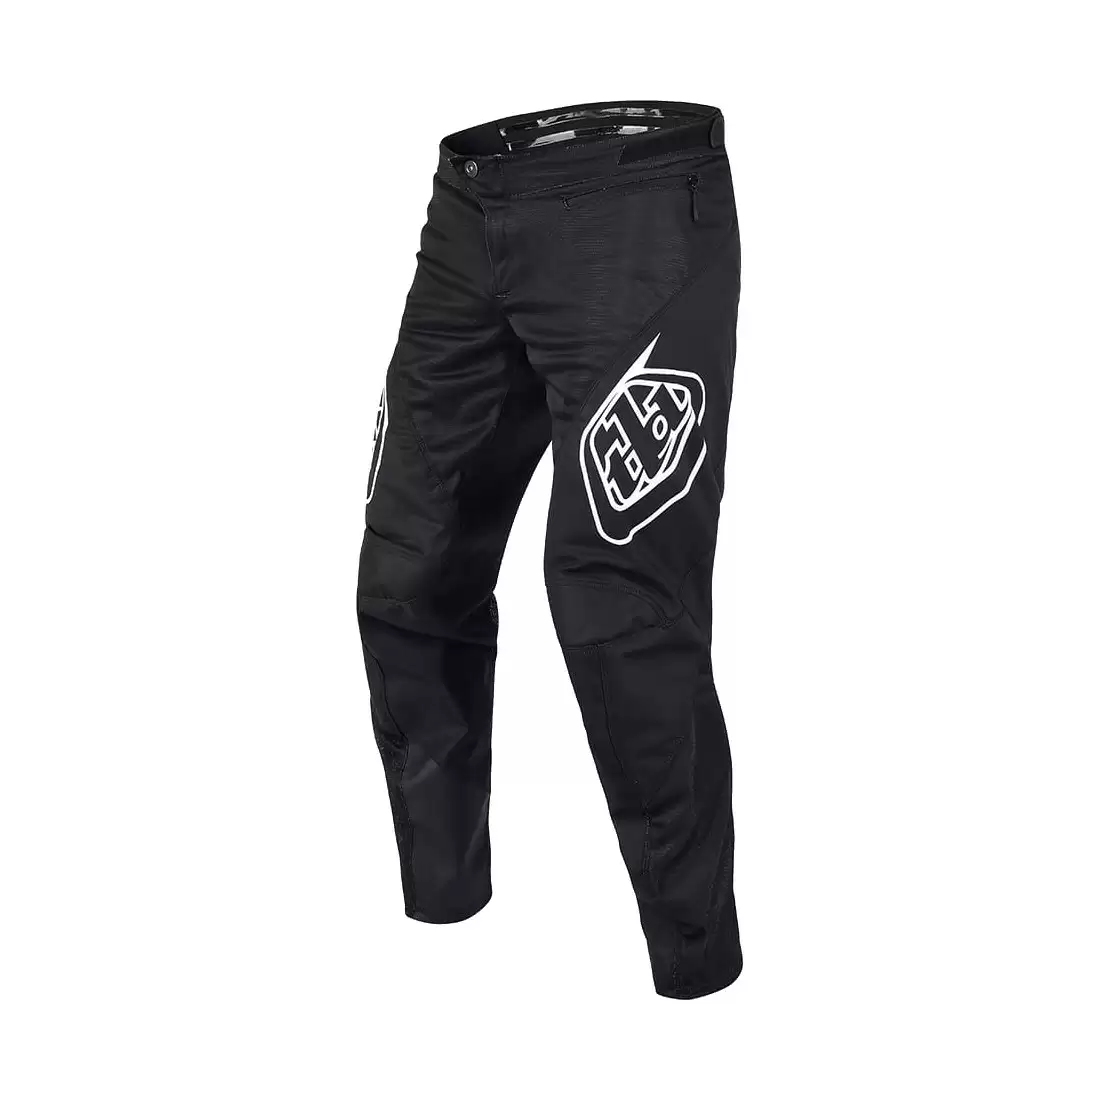 DH/Enduro Sprint MTB Long Pants Black Size XL - image